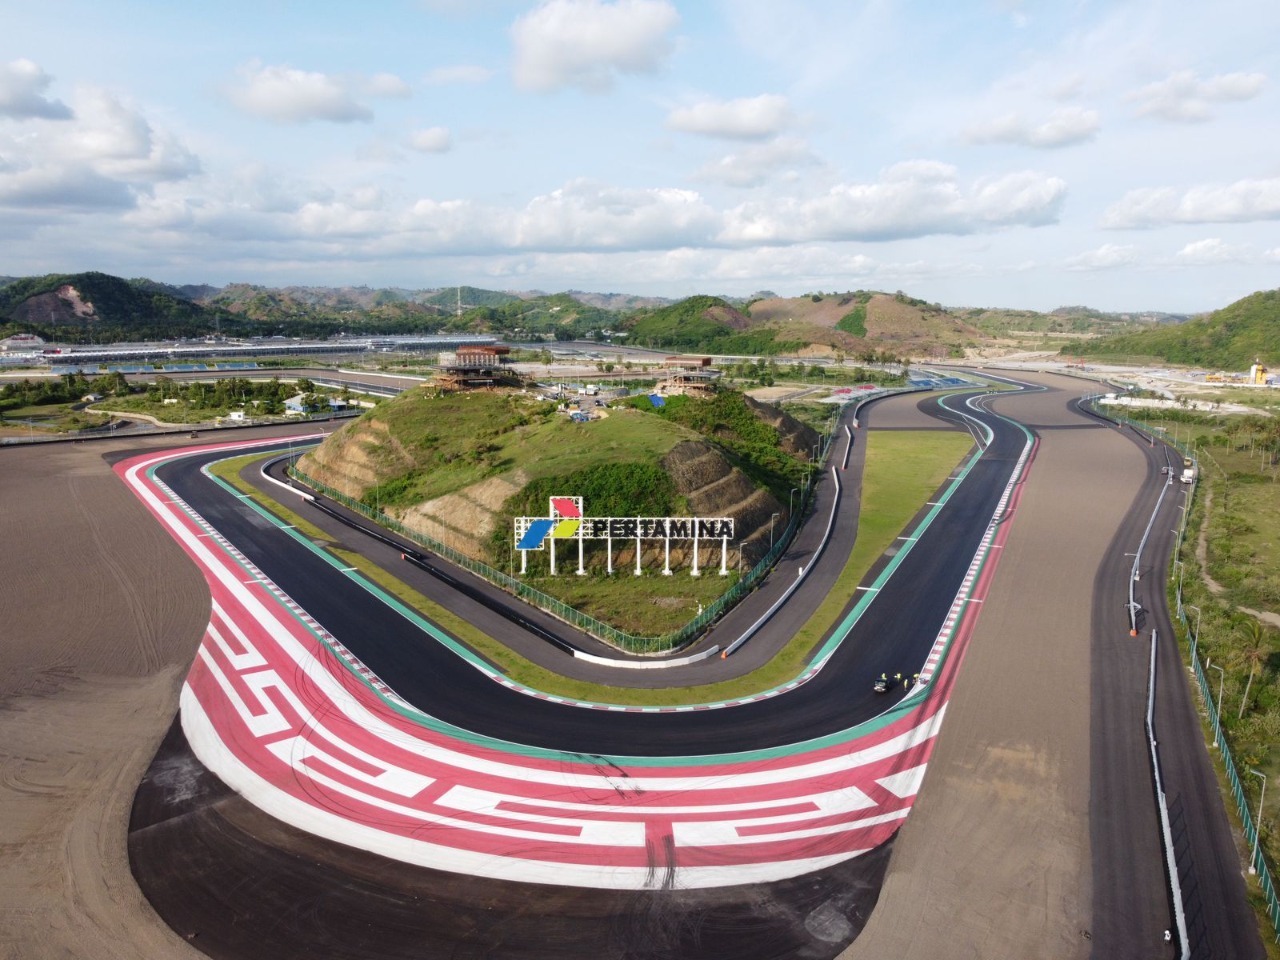 Sirkuit Mandalika akan Dapat Lisensi Grade 2 FIA, Layak Gelar GT World Challenge hingga Formula 2